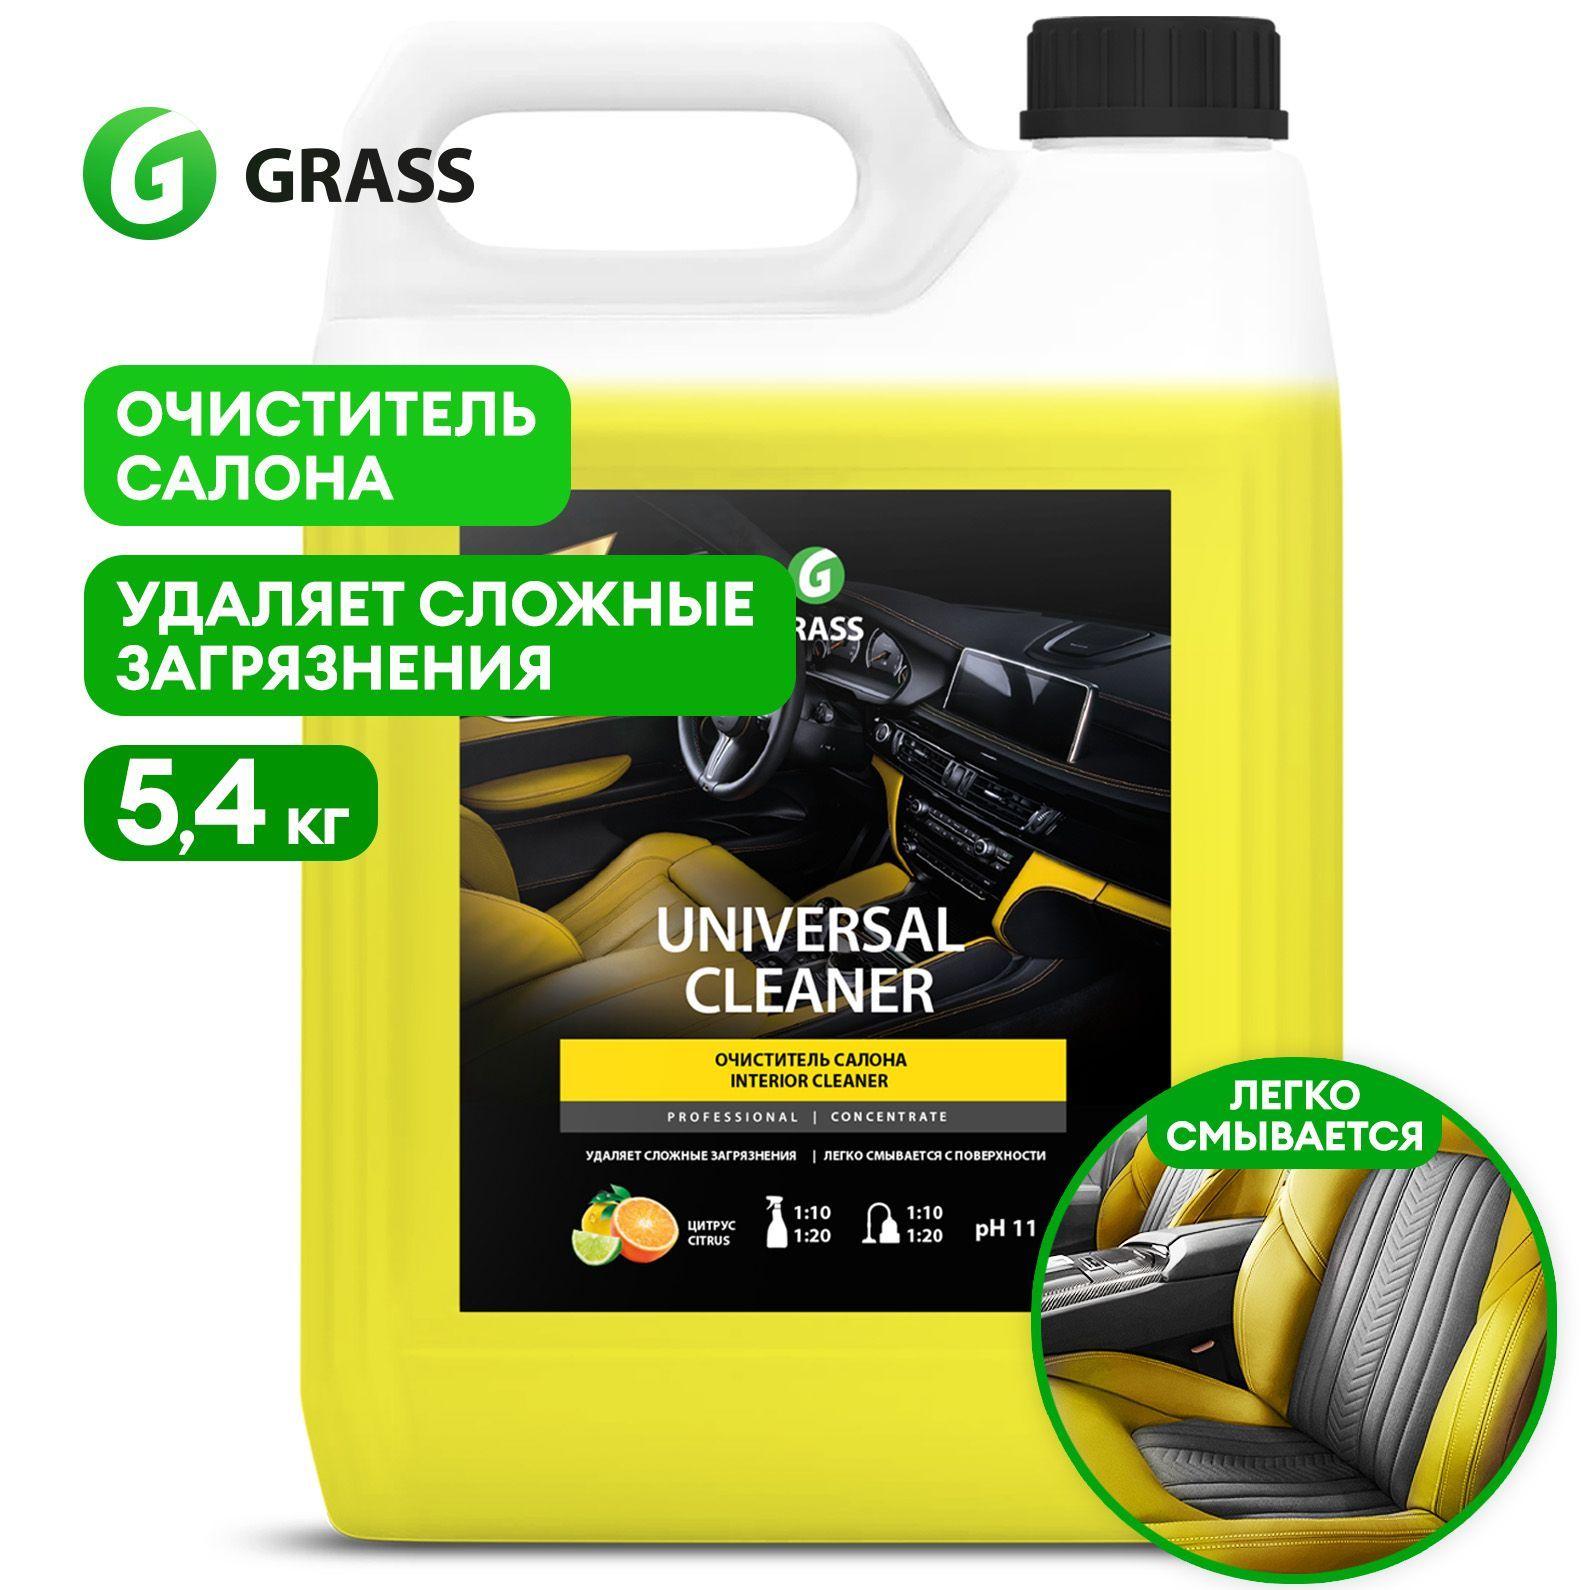 GRASS | Очиститель салона автомобиля Universal Cleaner, 5,4 кг